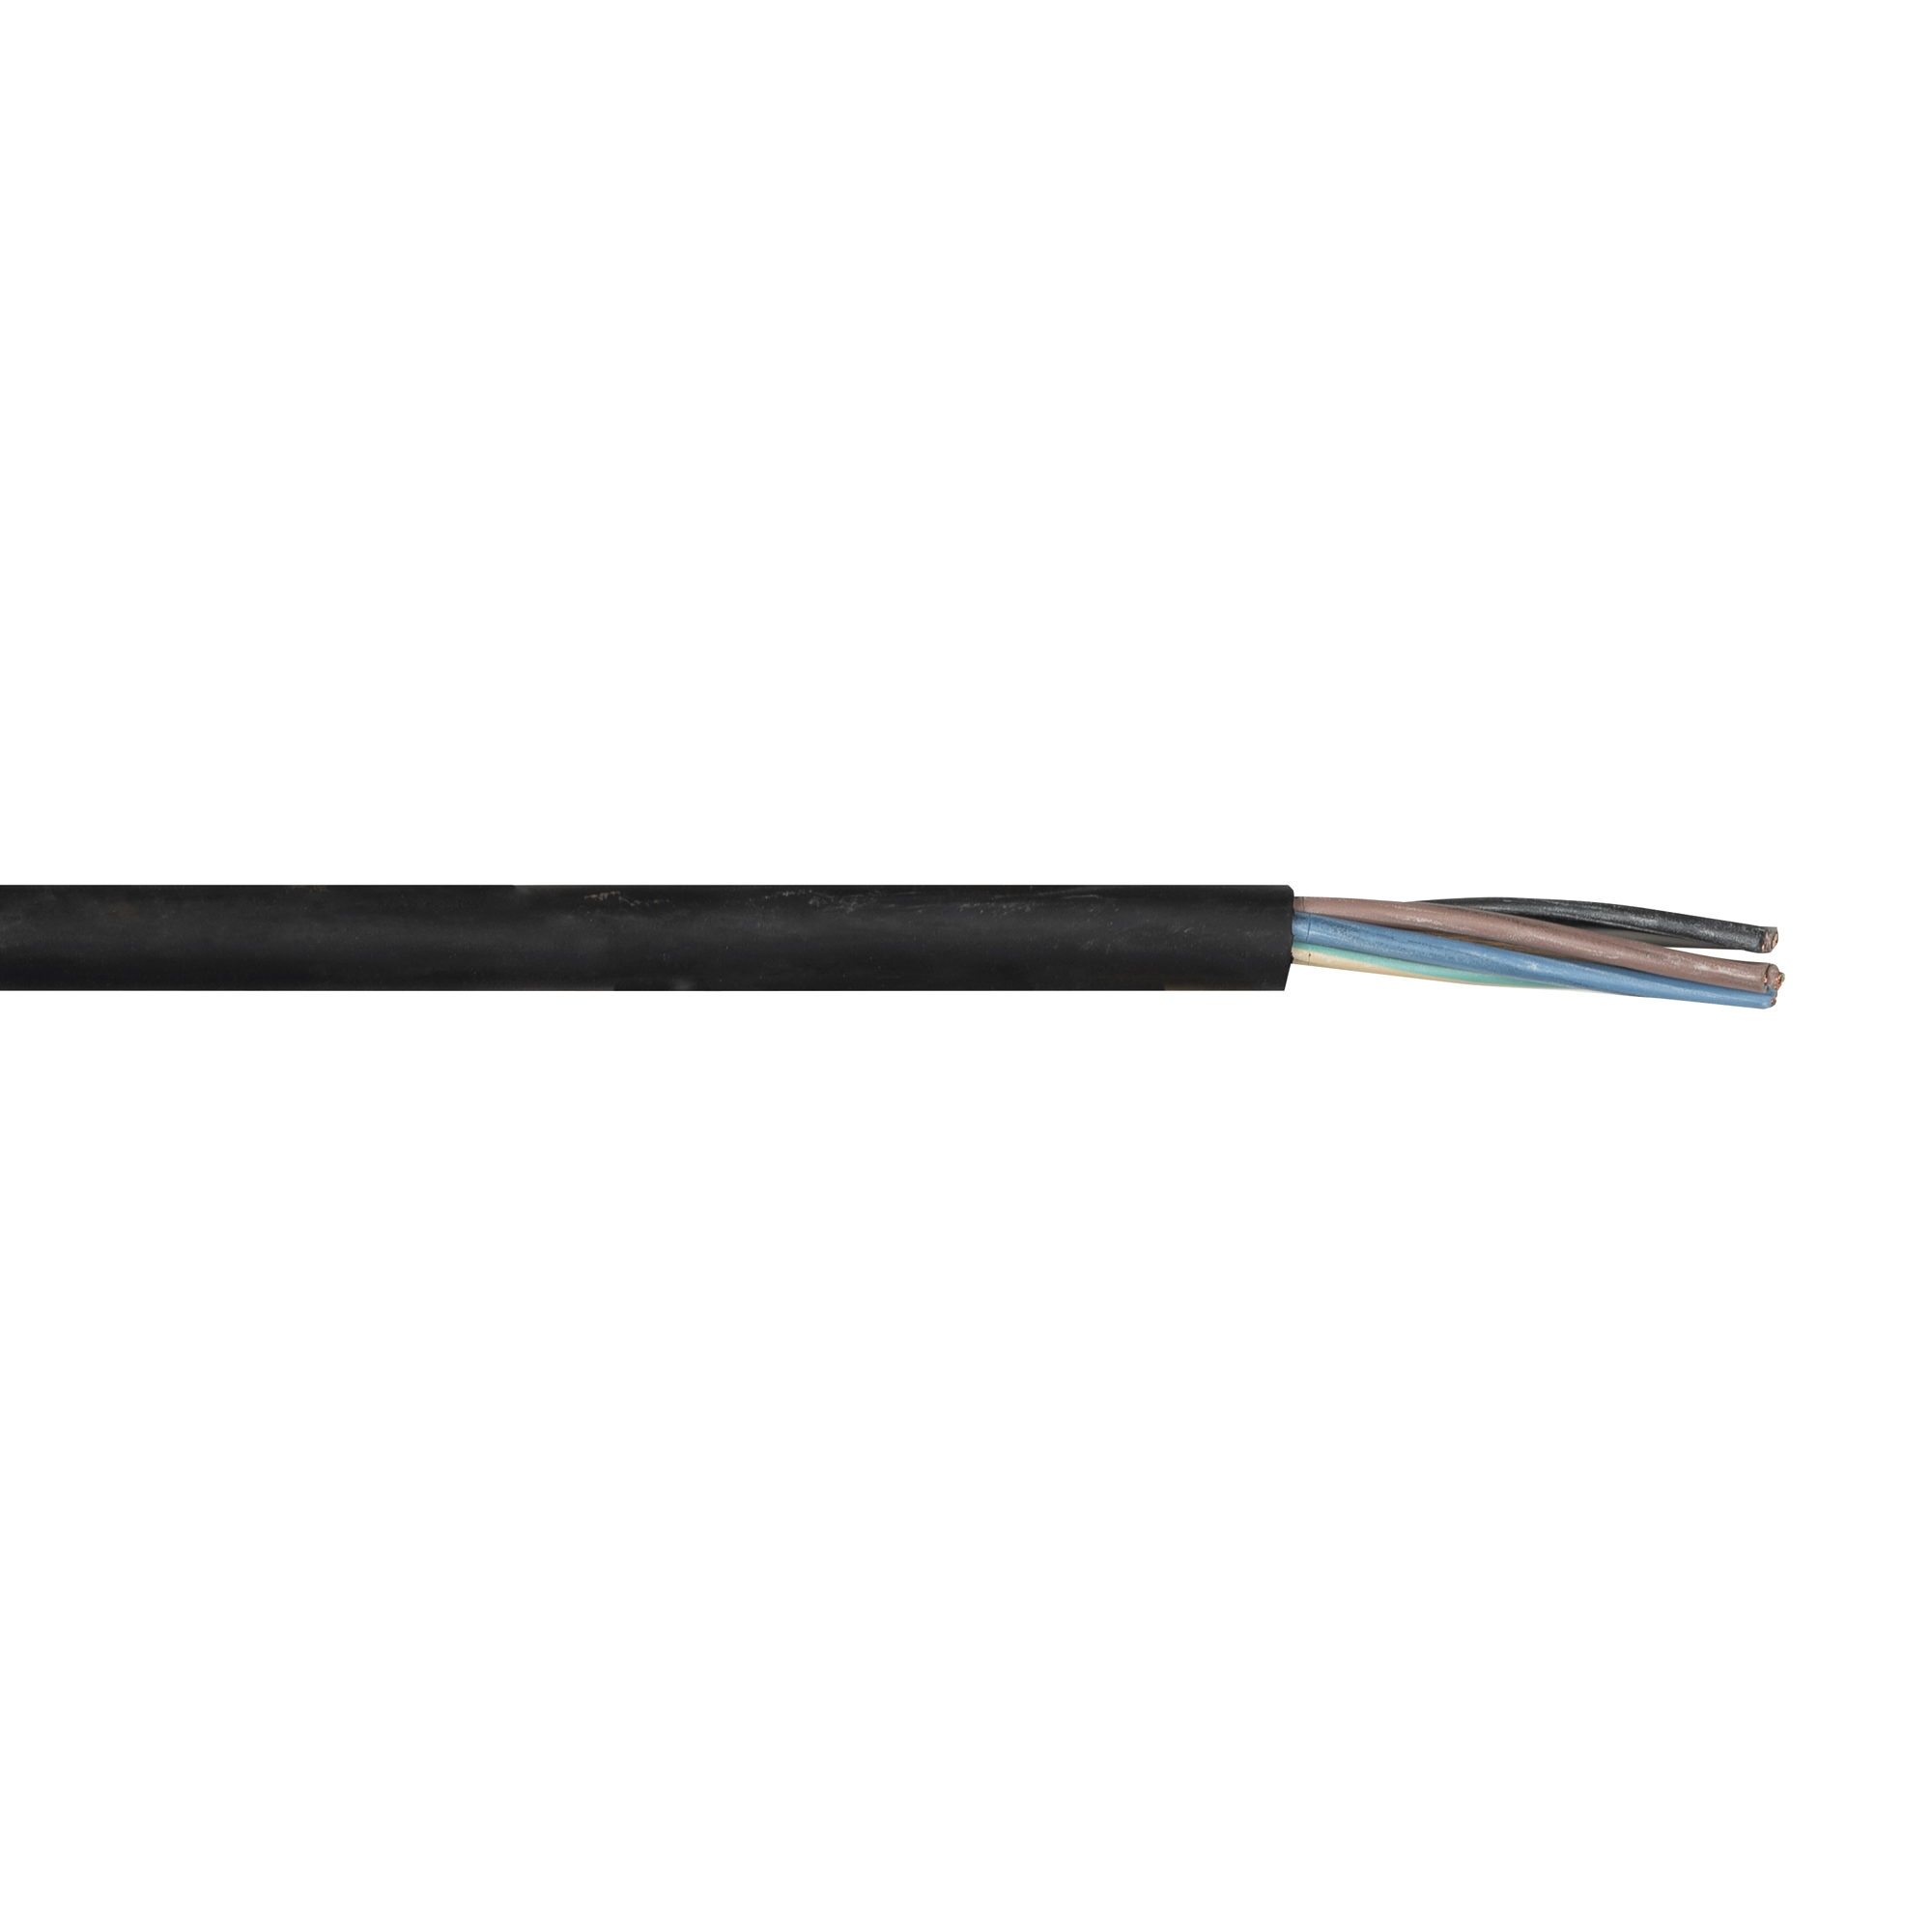 Lineax Lineax Neoprene Cable, Black pro m/5 x 2.5 mm2